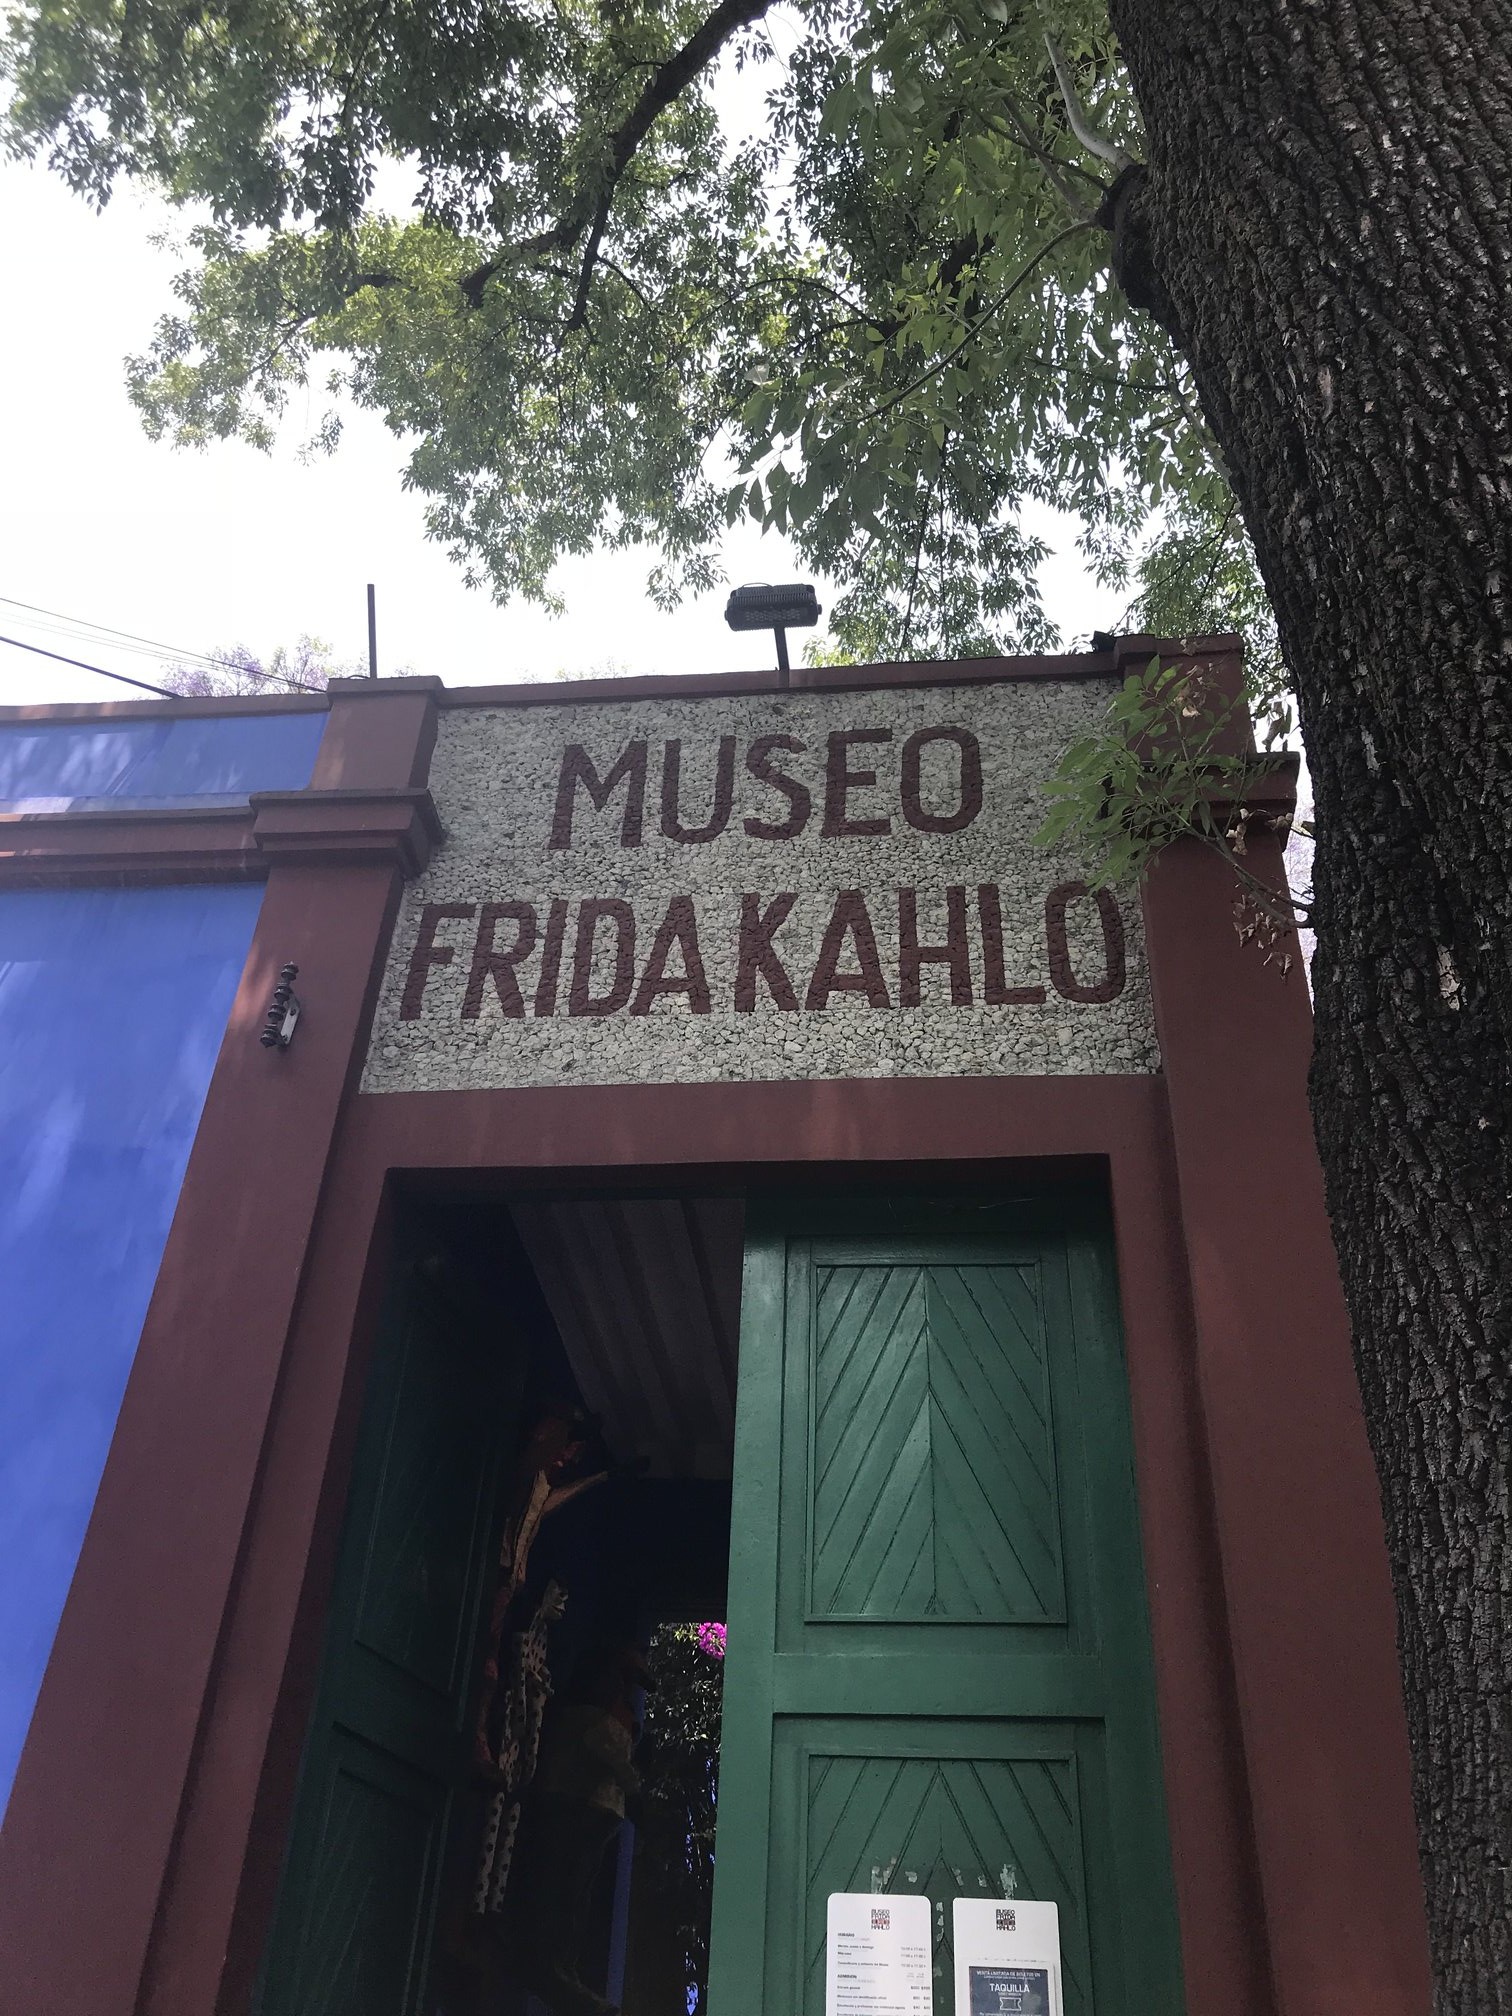 Entrance to Frida Kahlo museum